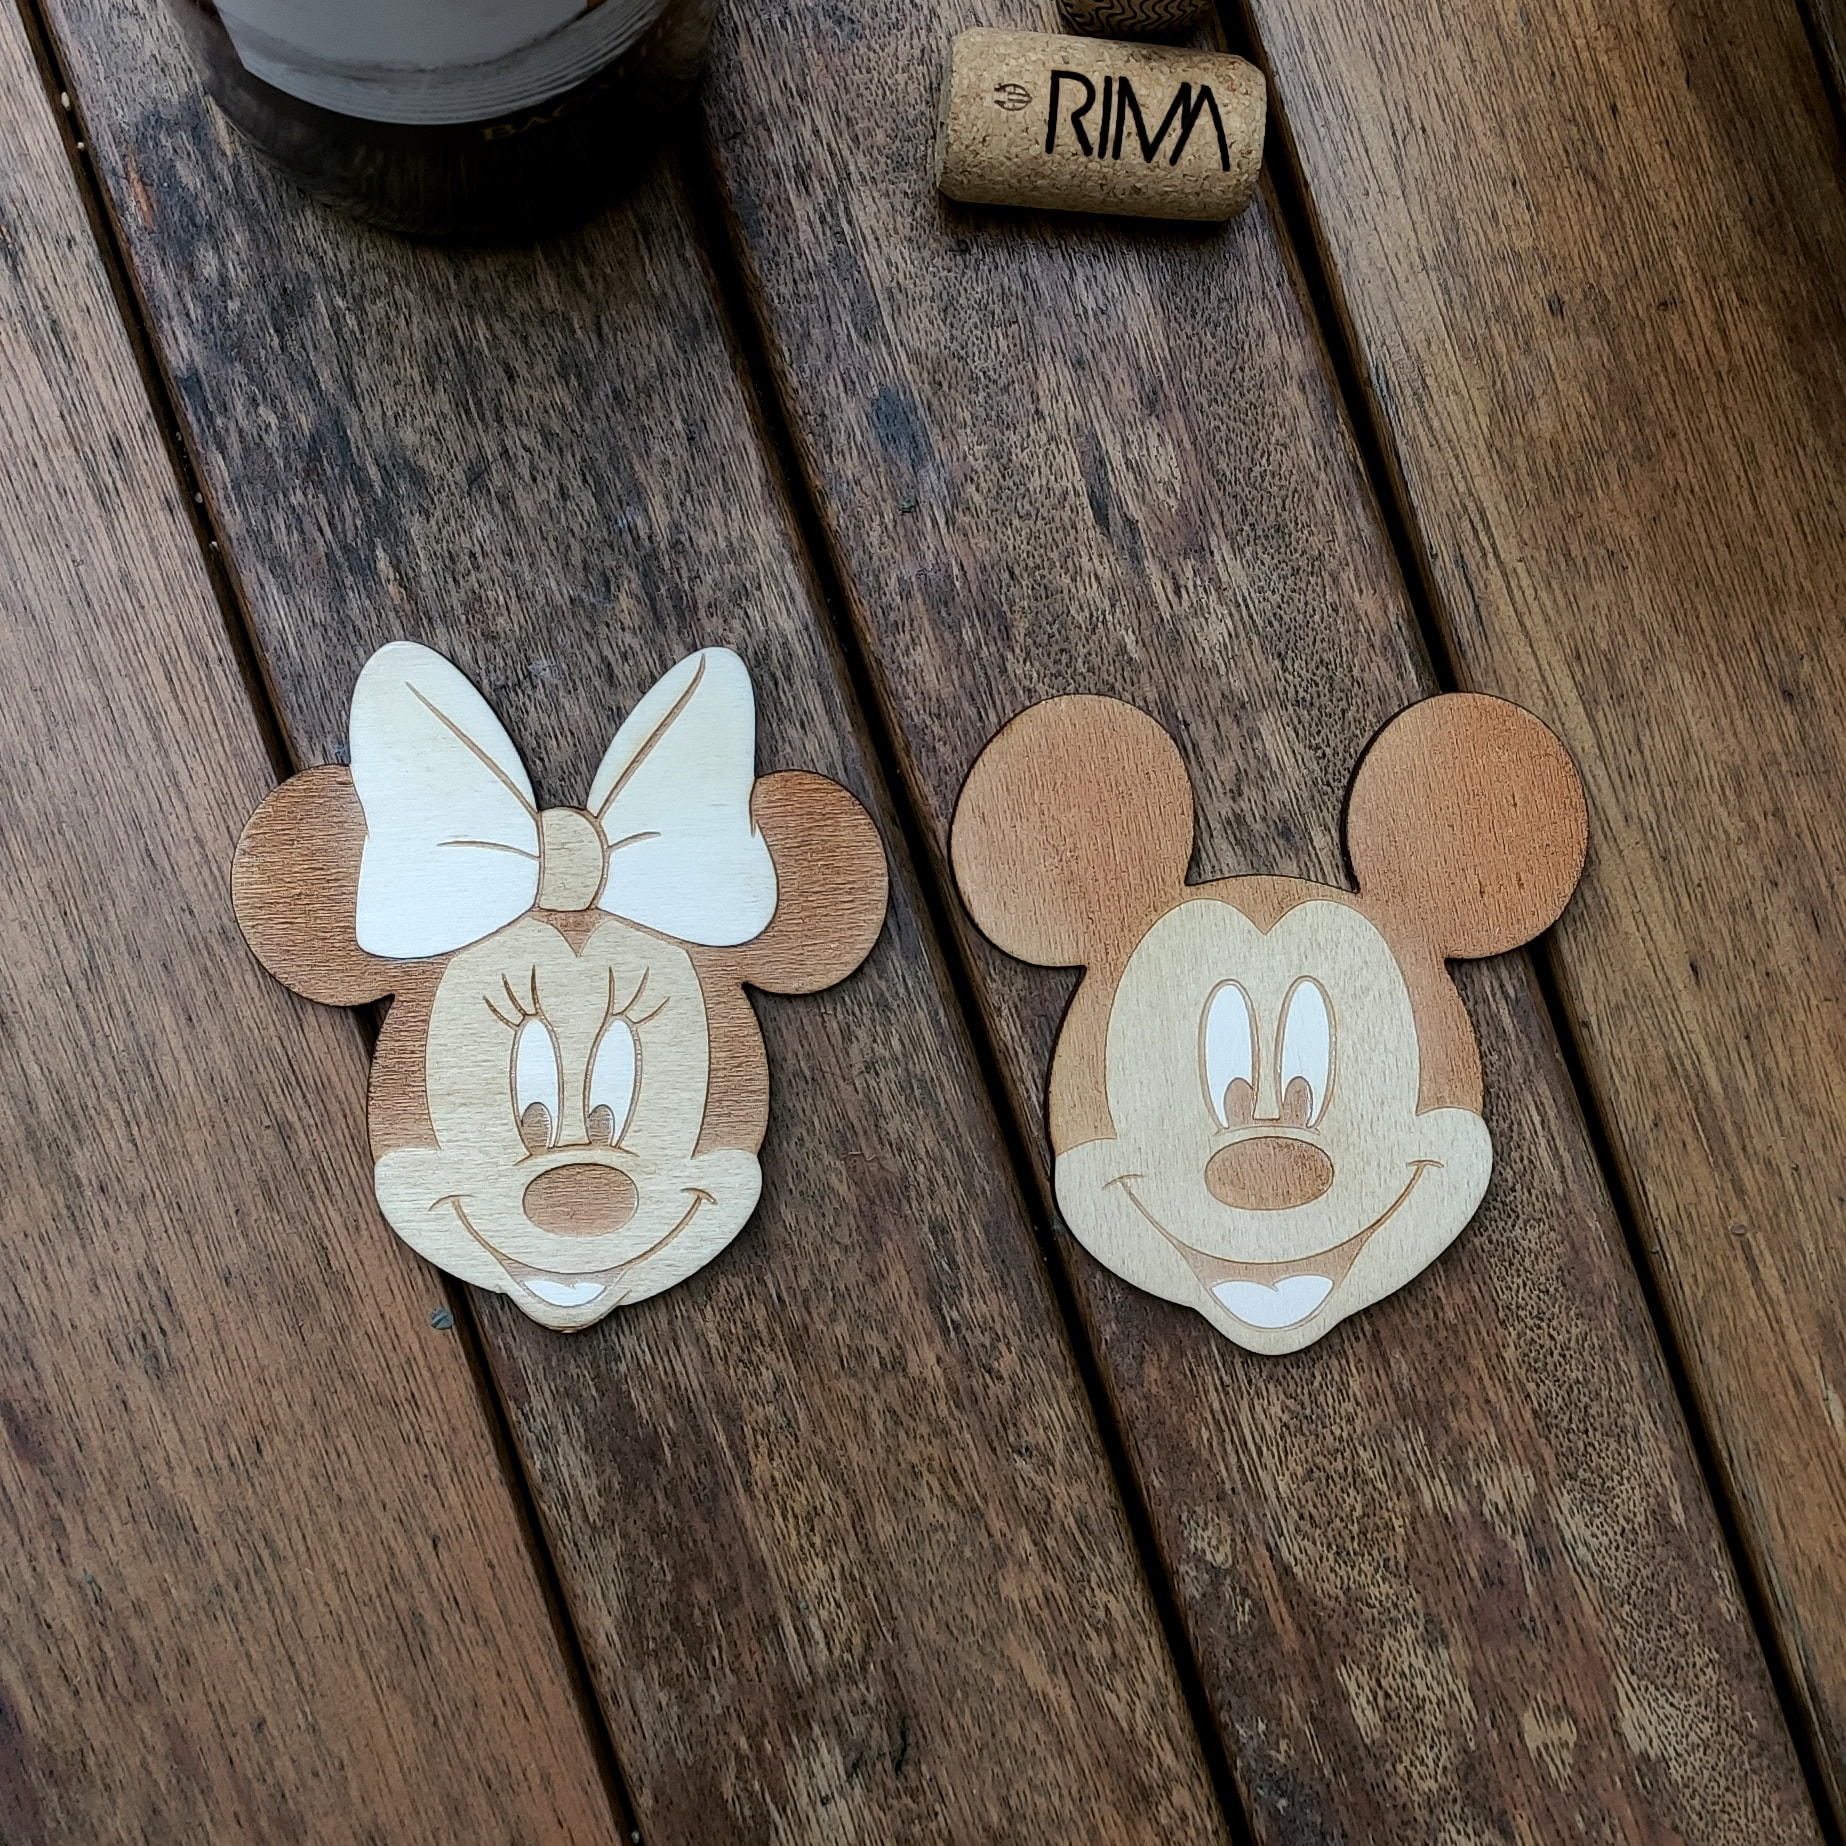 Mickey & Minnie Wood Coaster